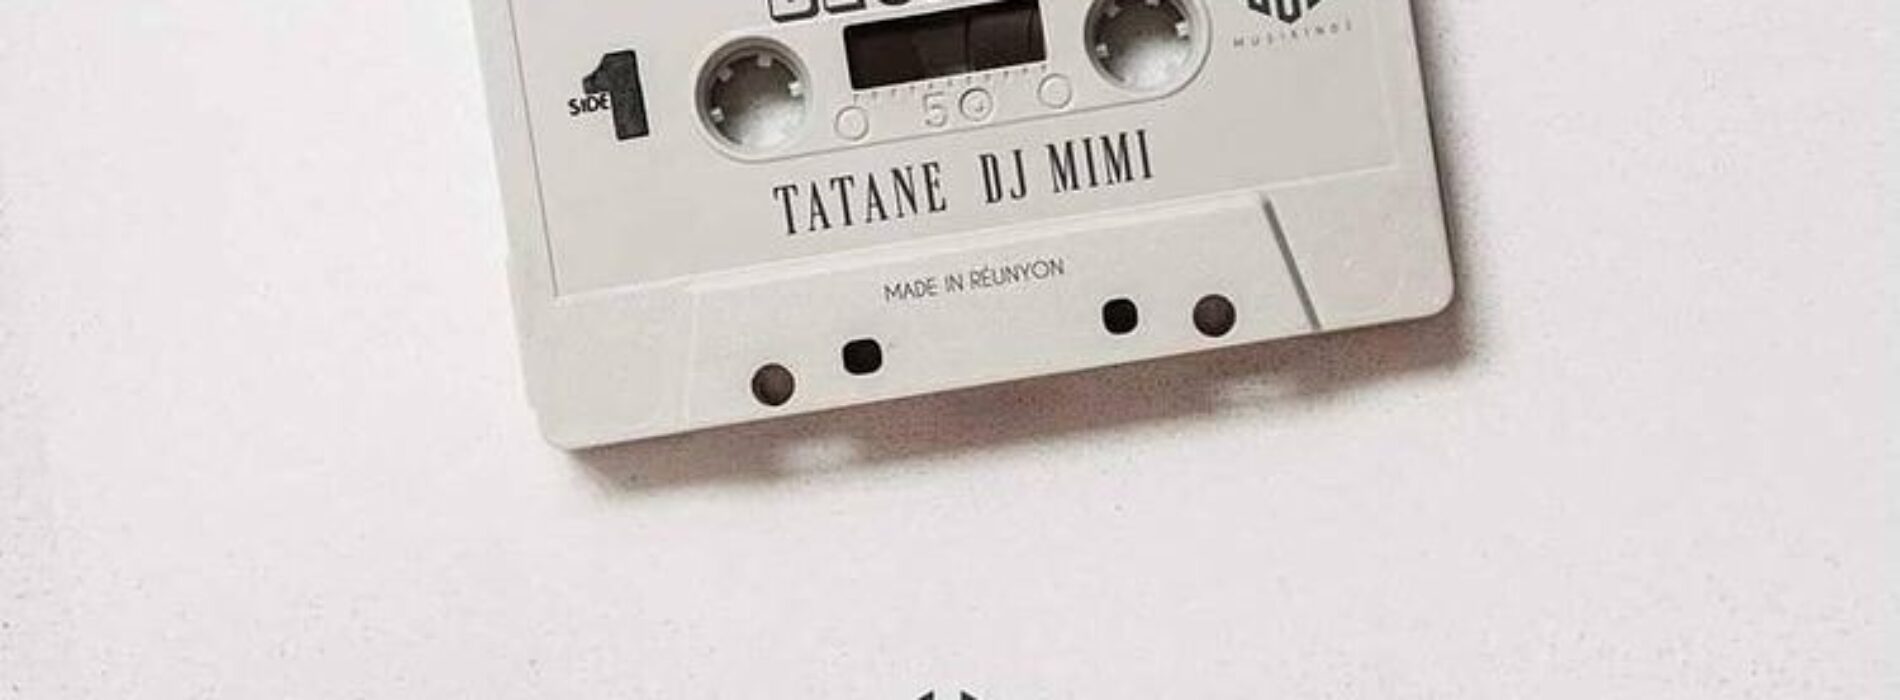 🇷🇪🇷🇪 TATANE DJ MIMI – BLOKOP [Official Audio] – Août 2021🇷🇪🔥🔥🔥🔥